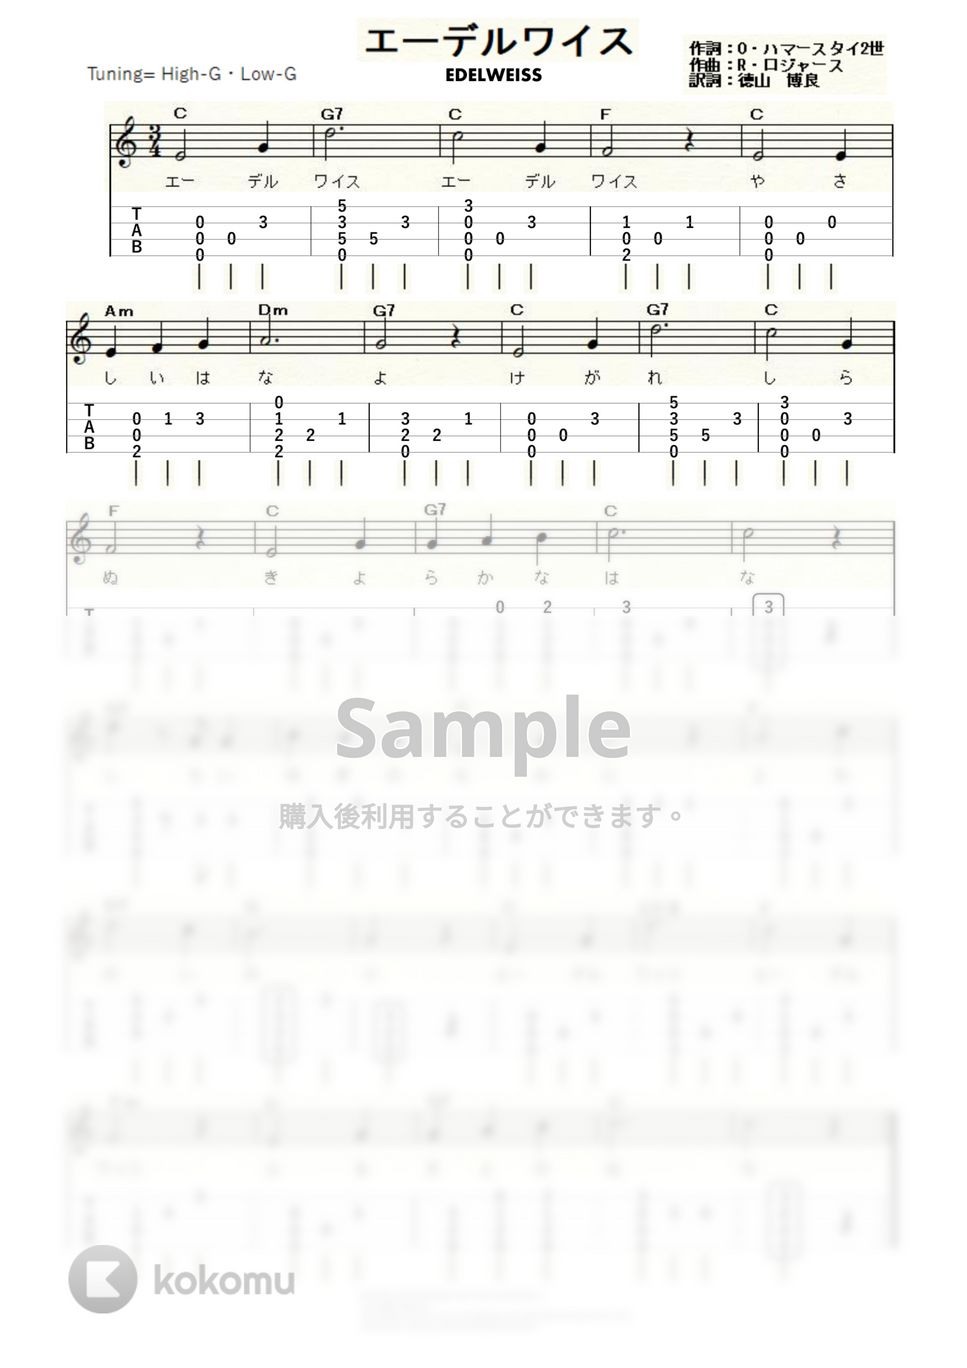 Ｒ・ロジャース - エーデルワイス (ｳｸﾚﾚｿﾛ / High-G,Low-G / 初級) by ukulelepapa